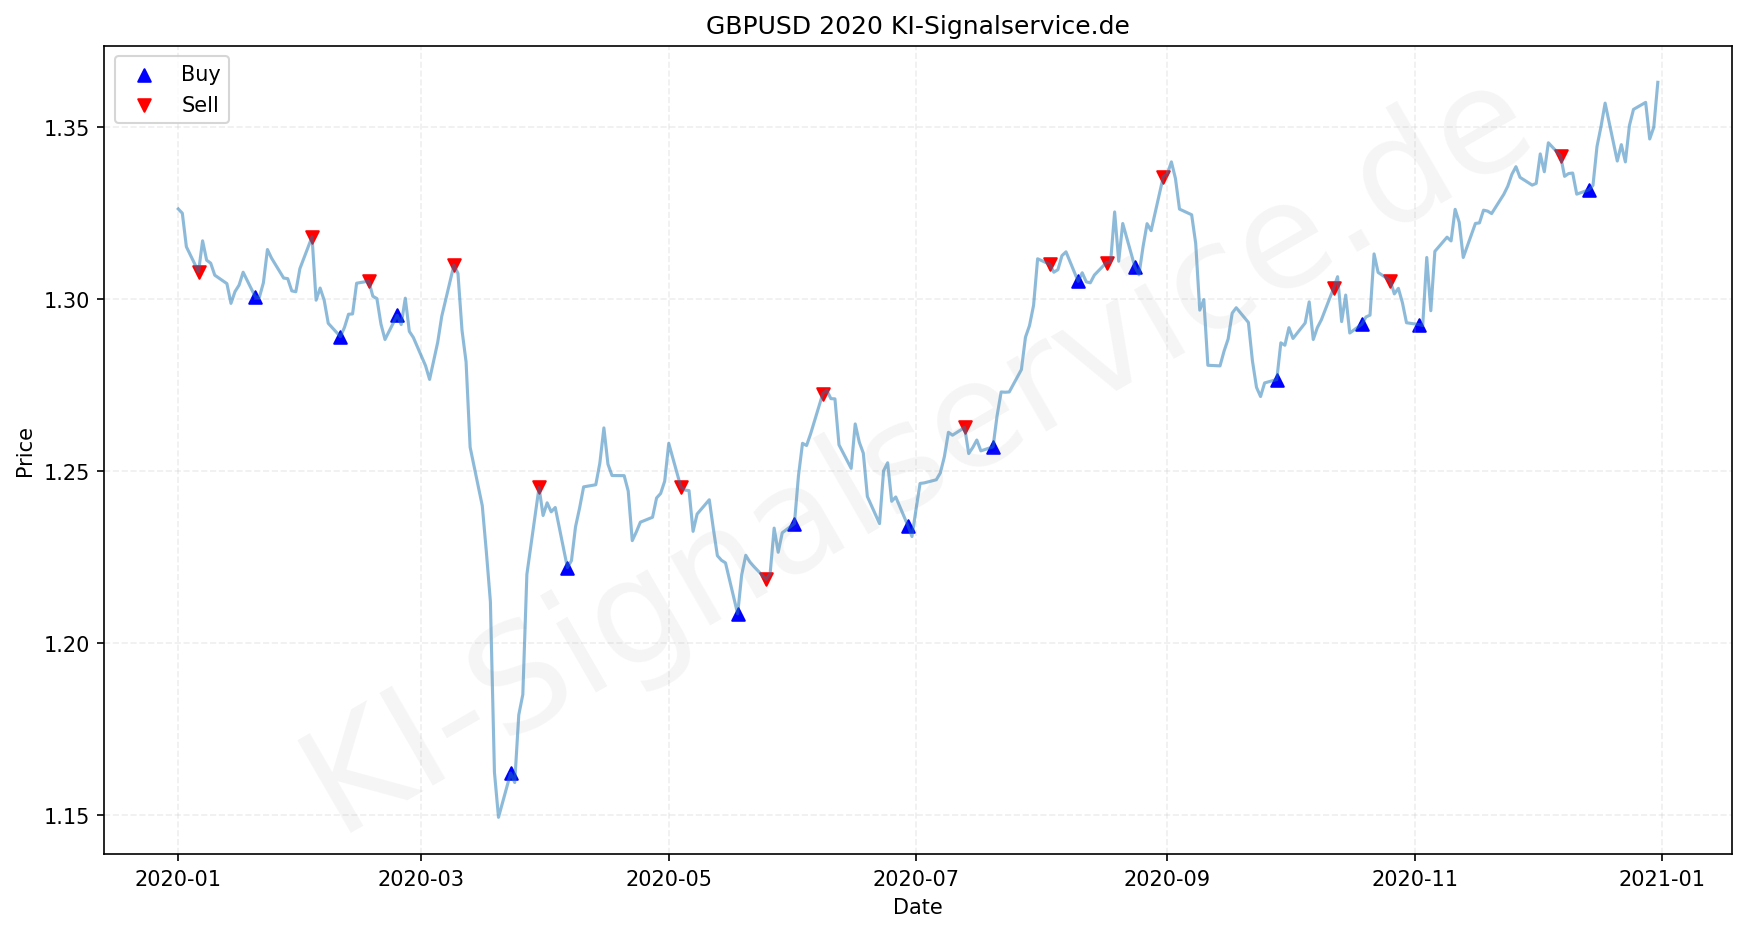 GBPUSD Chart - KI Tradingsignale 2020